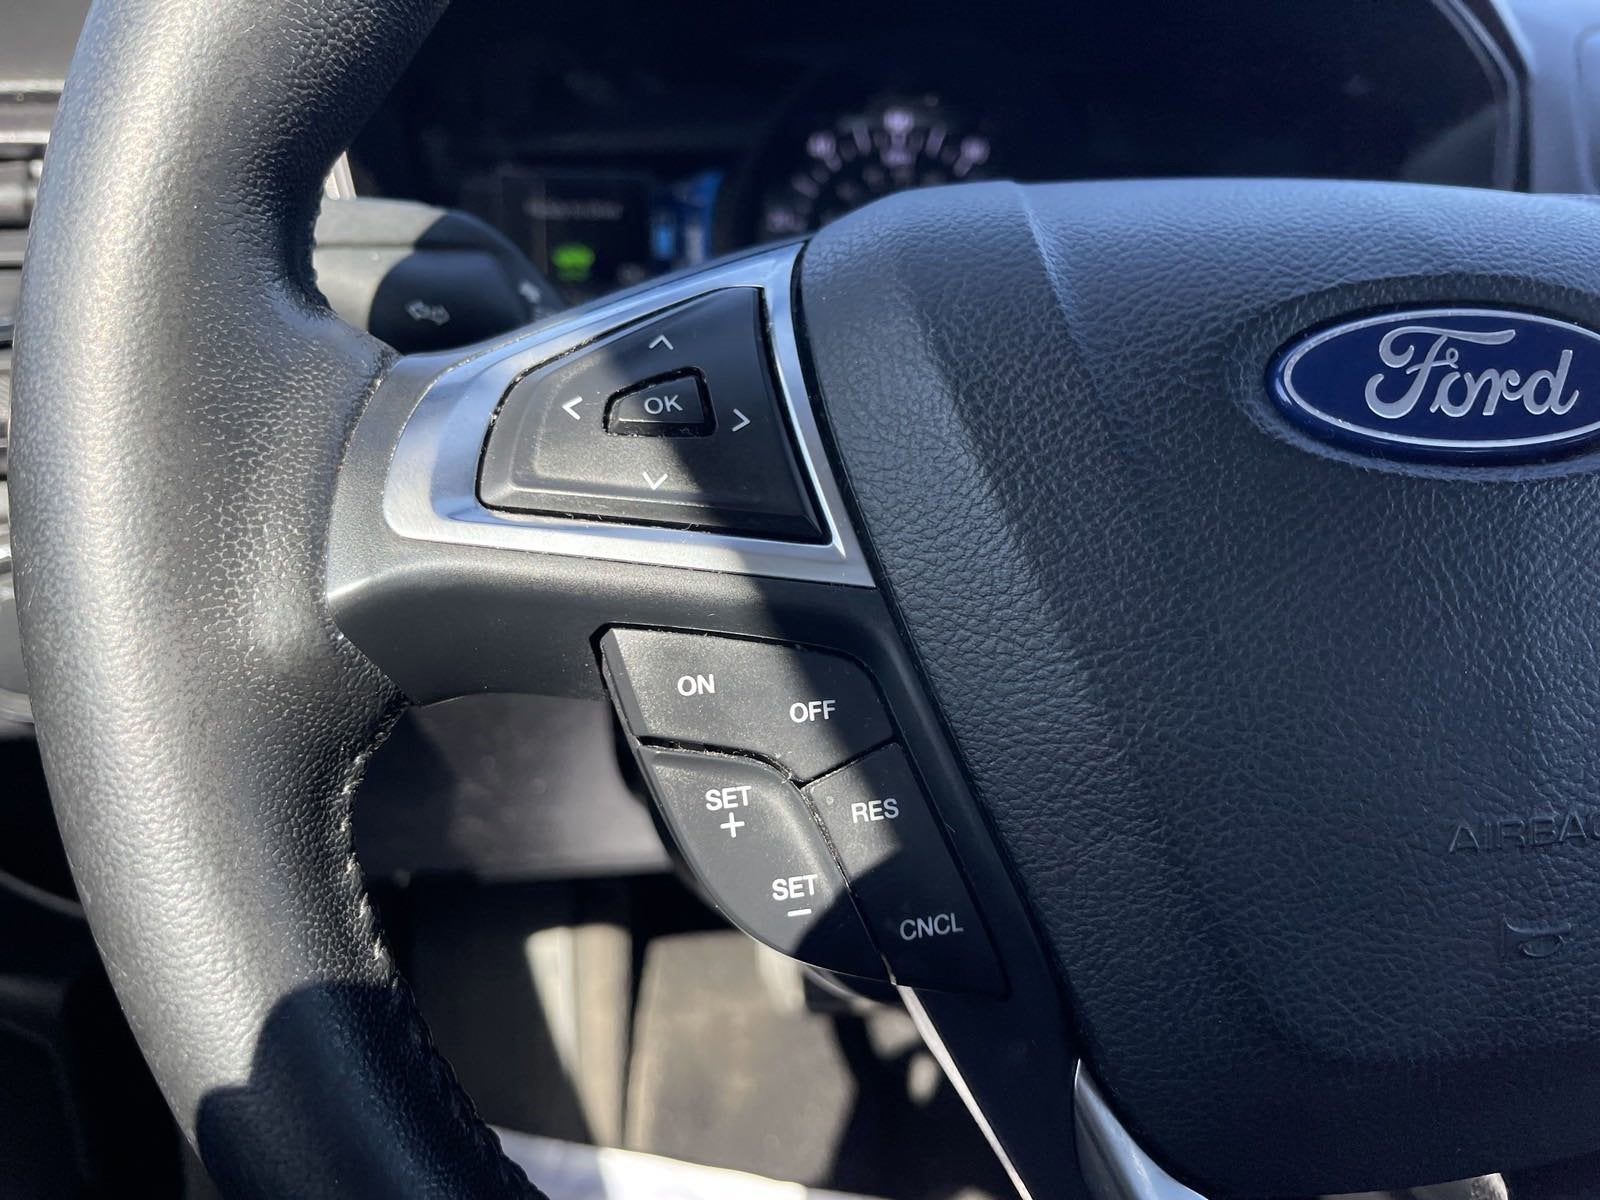 2018 Ford Fusion Hybrid SE